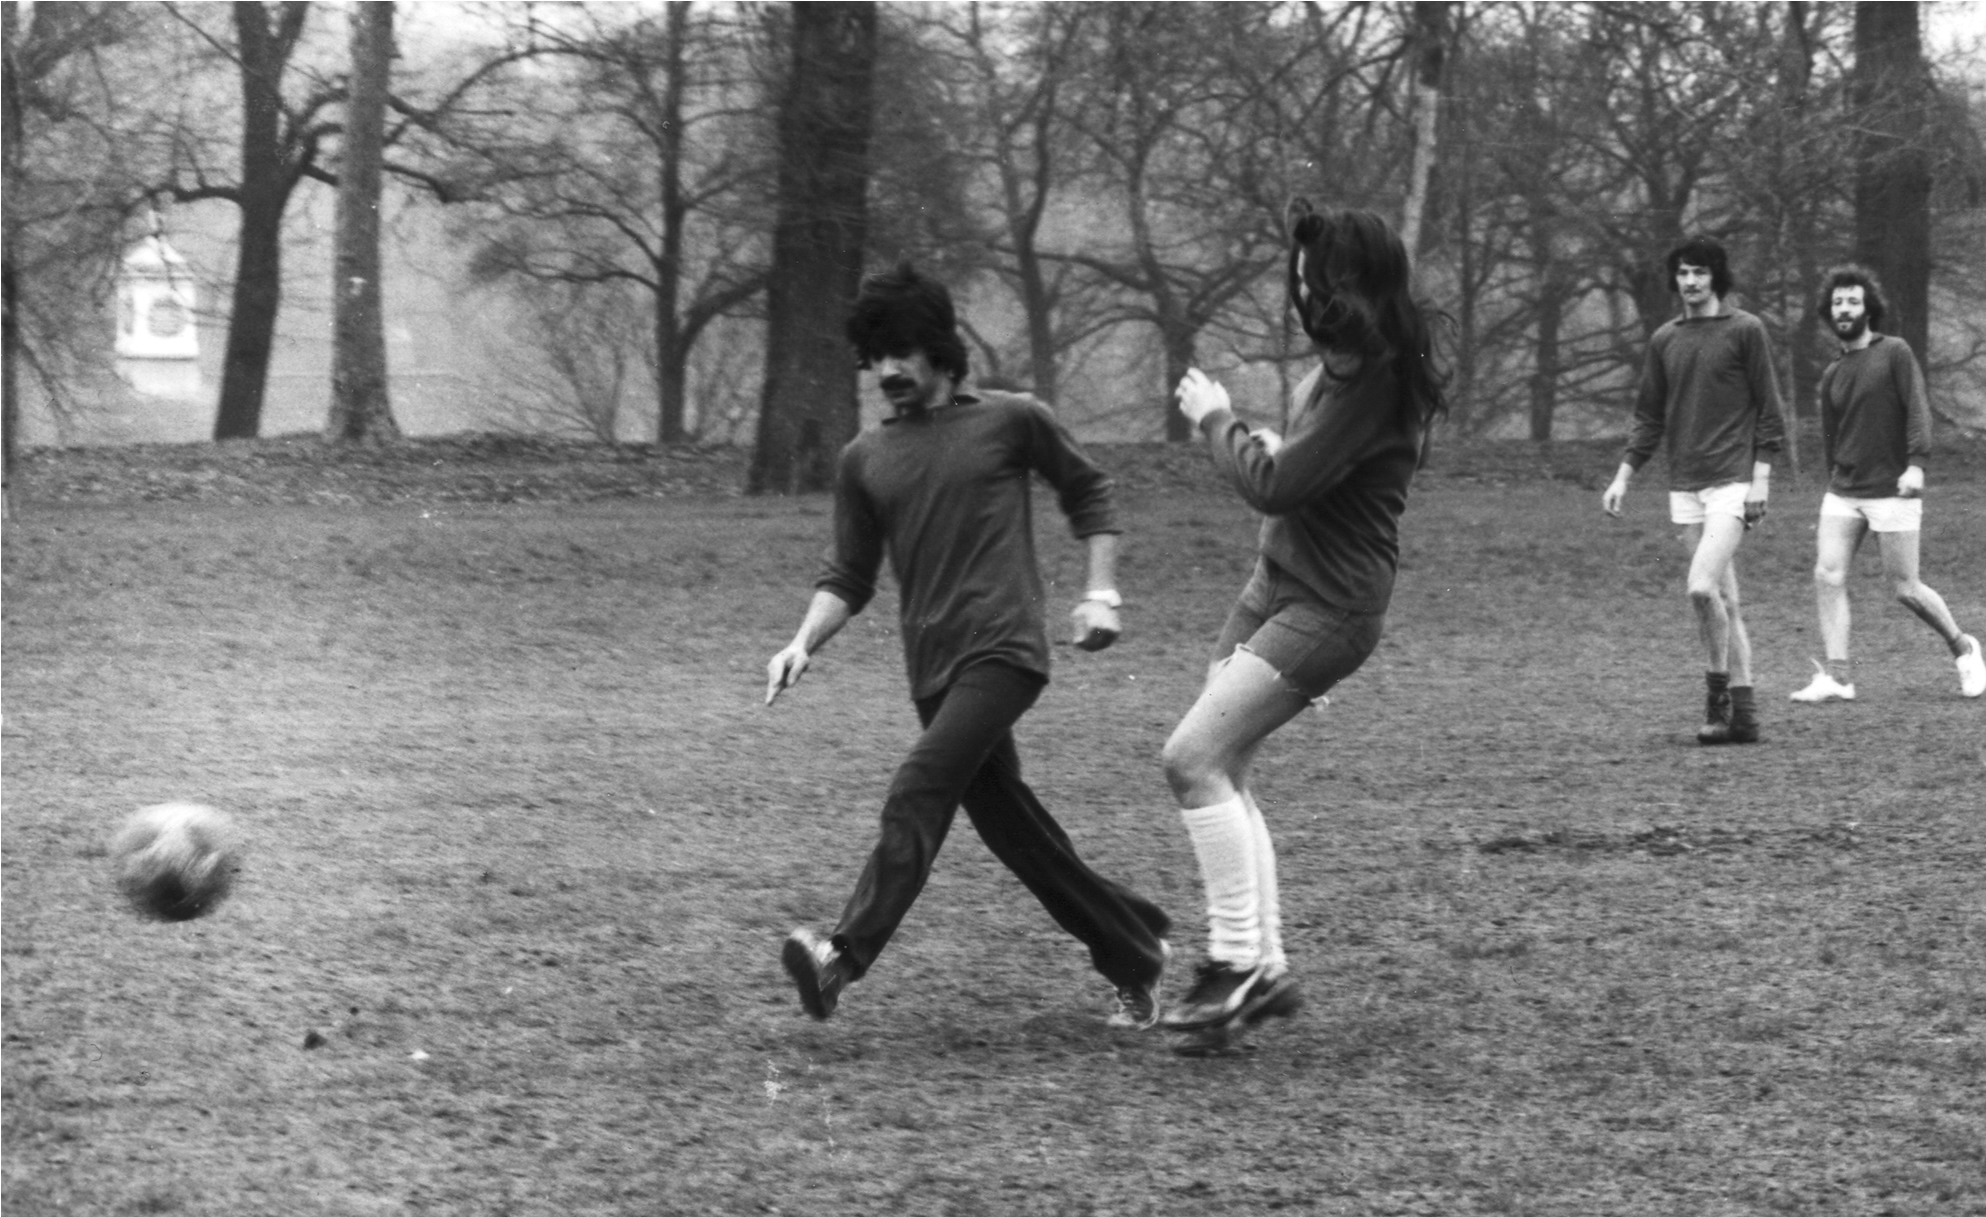 Linda playing in the football match, departmental secretaries versus postgrad students. 